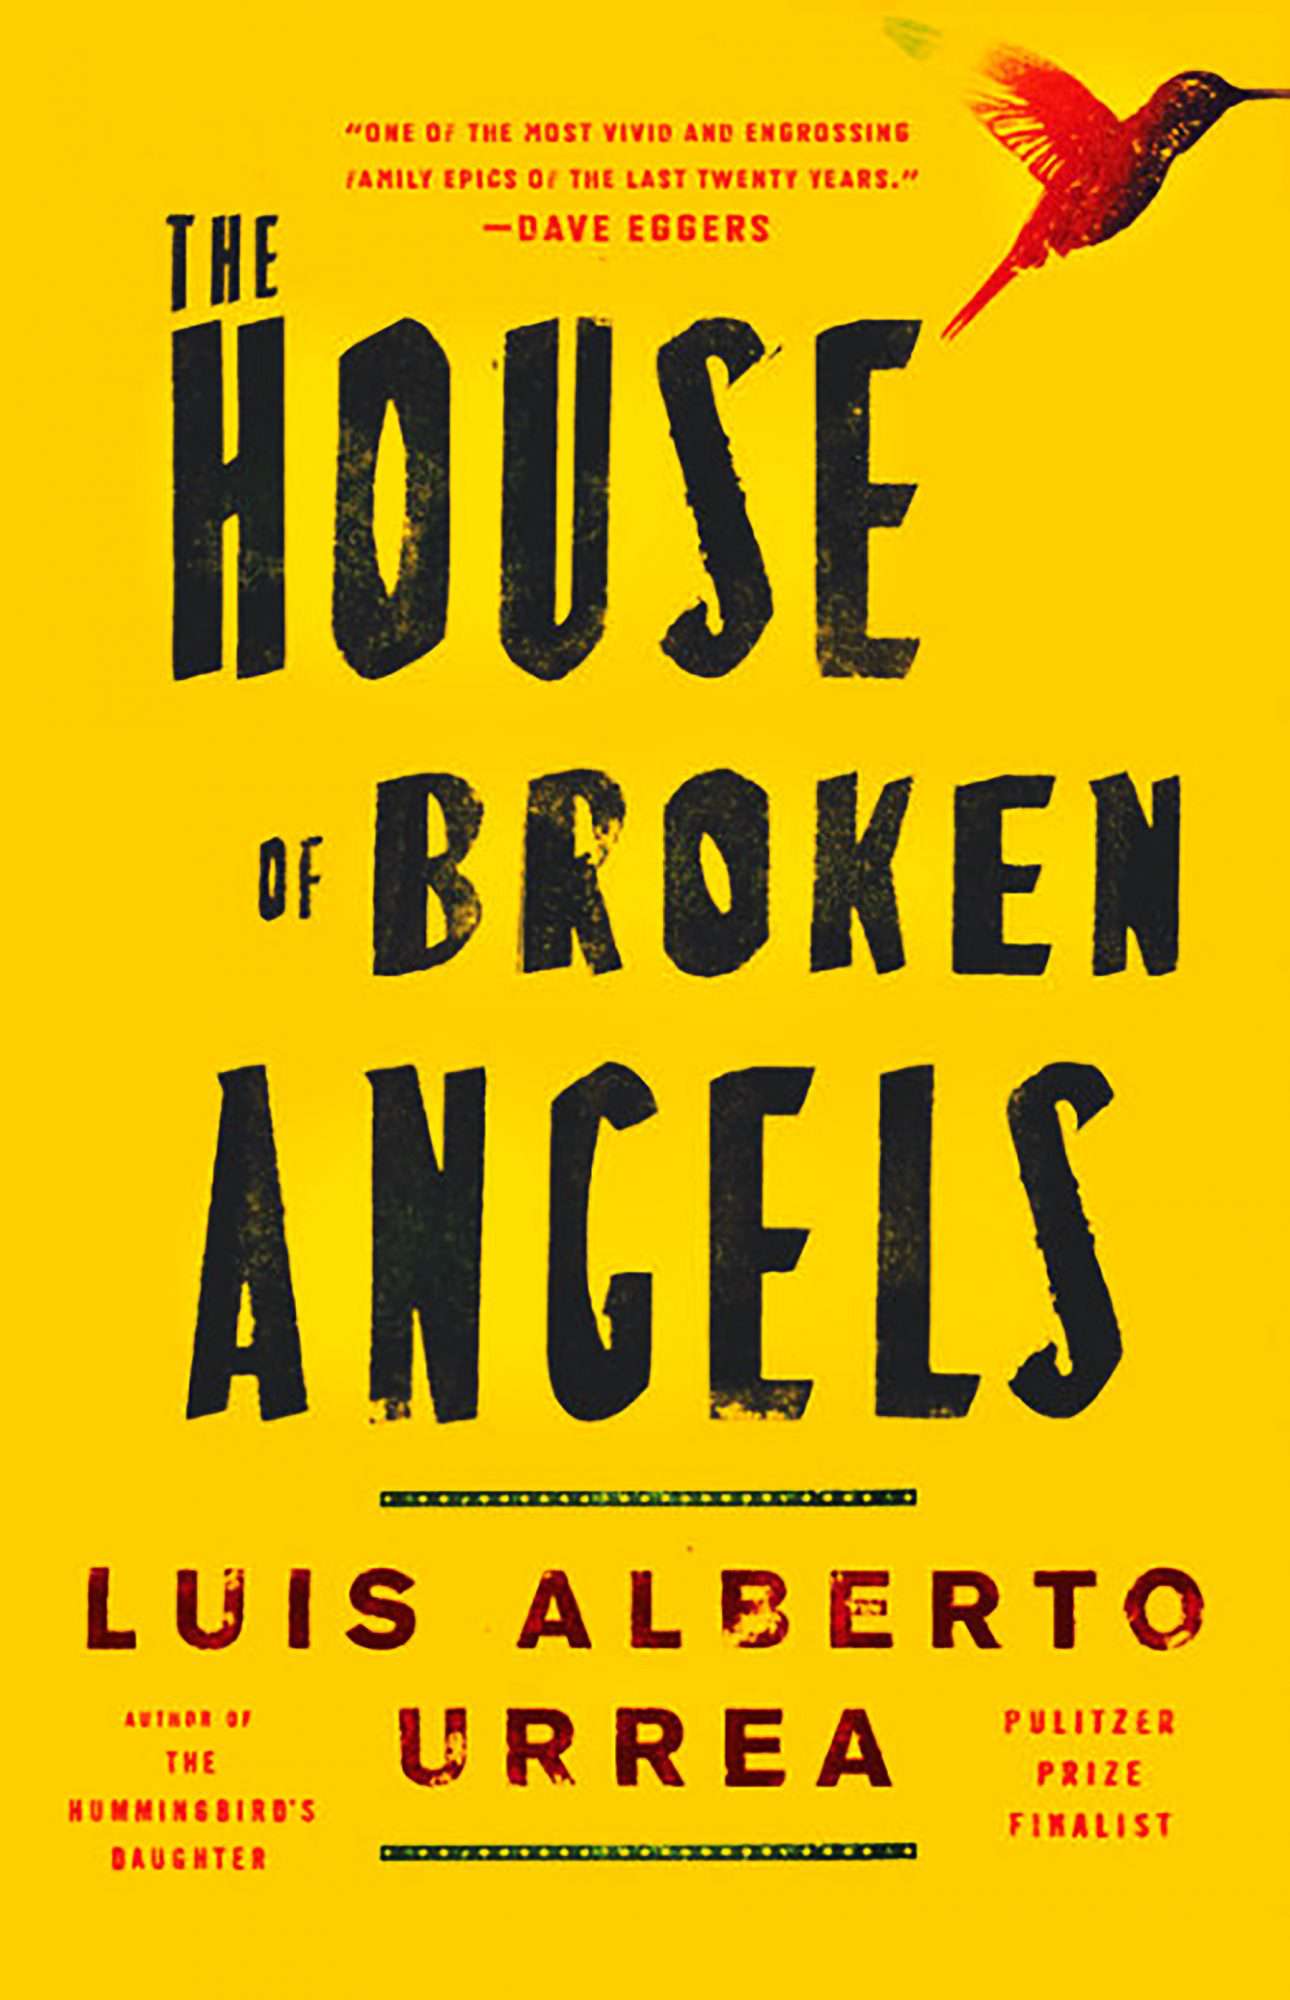 The House of Broken Angels, by Luis Alberto Urrea